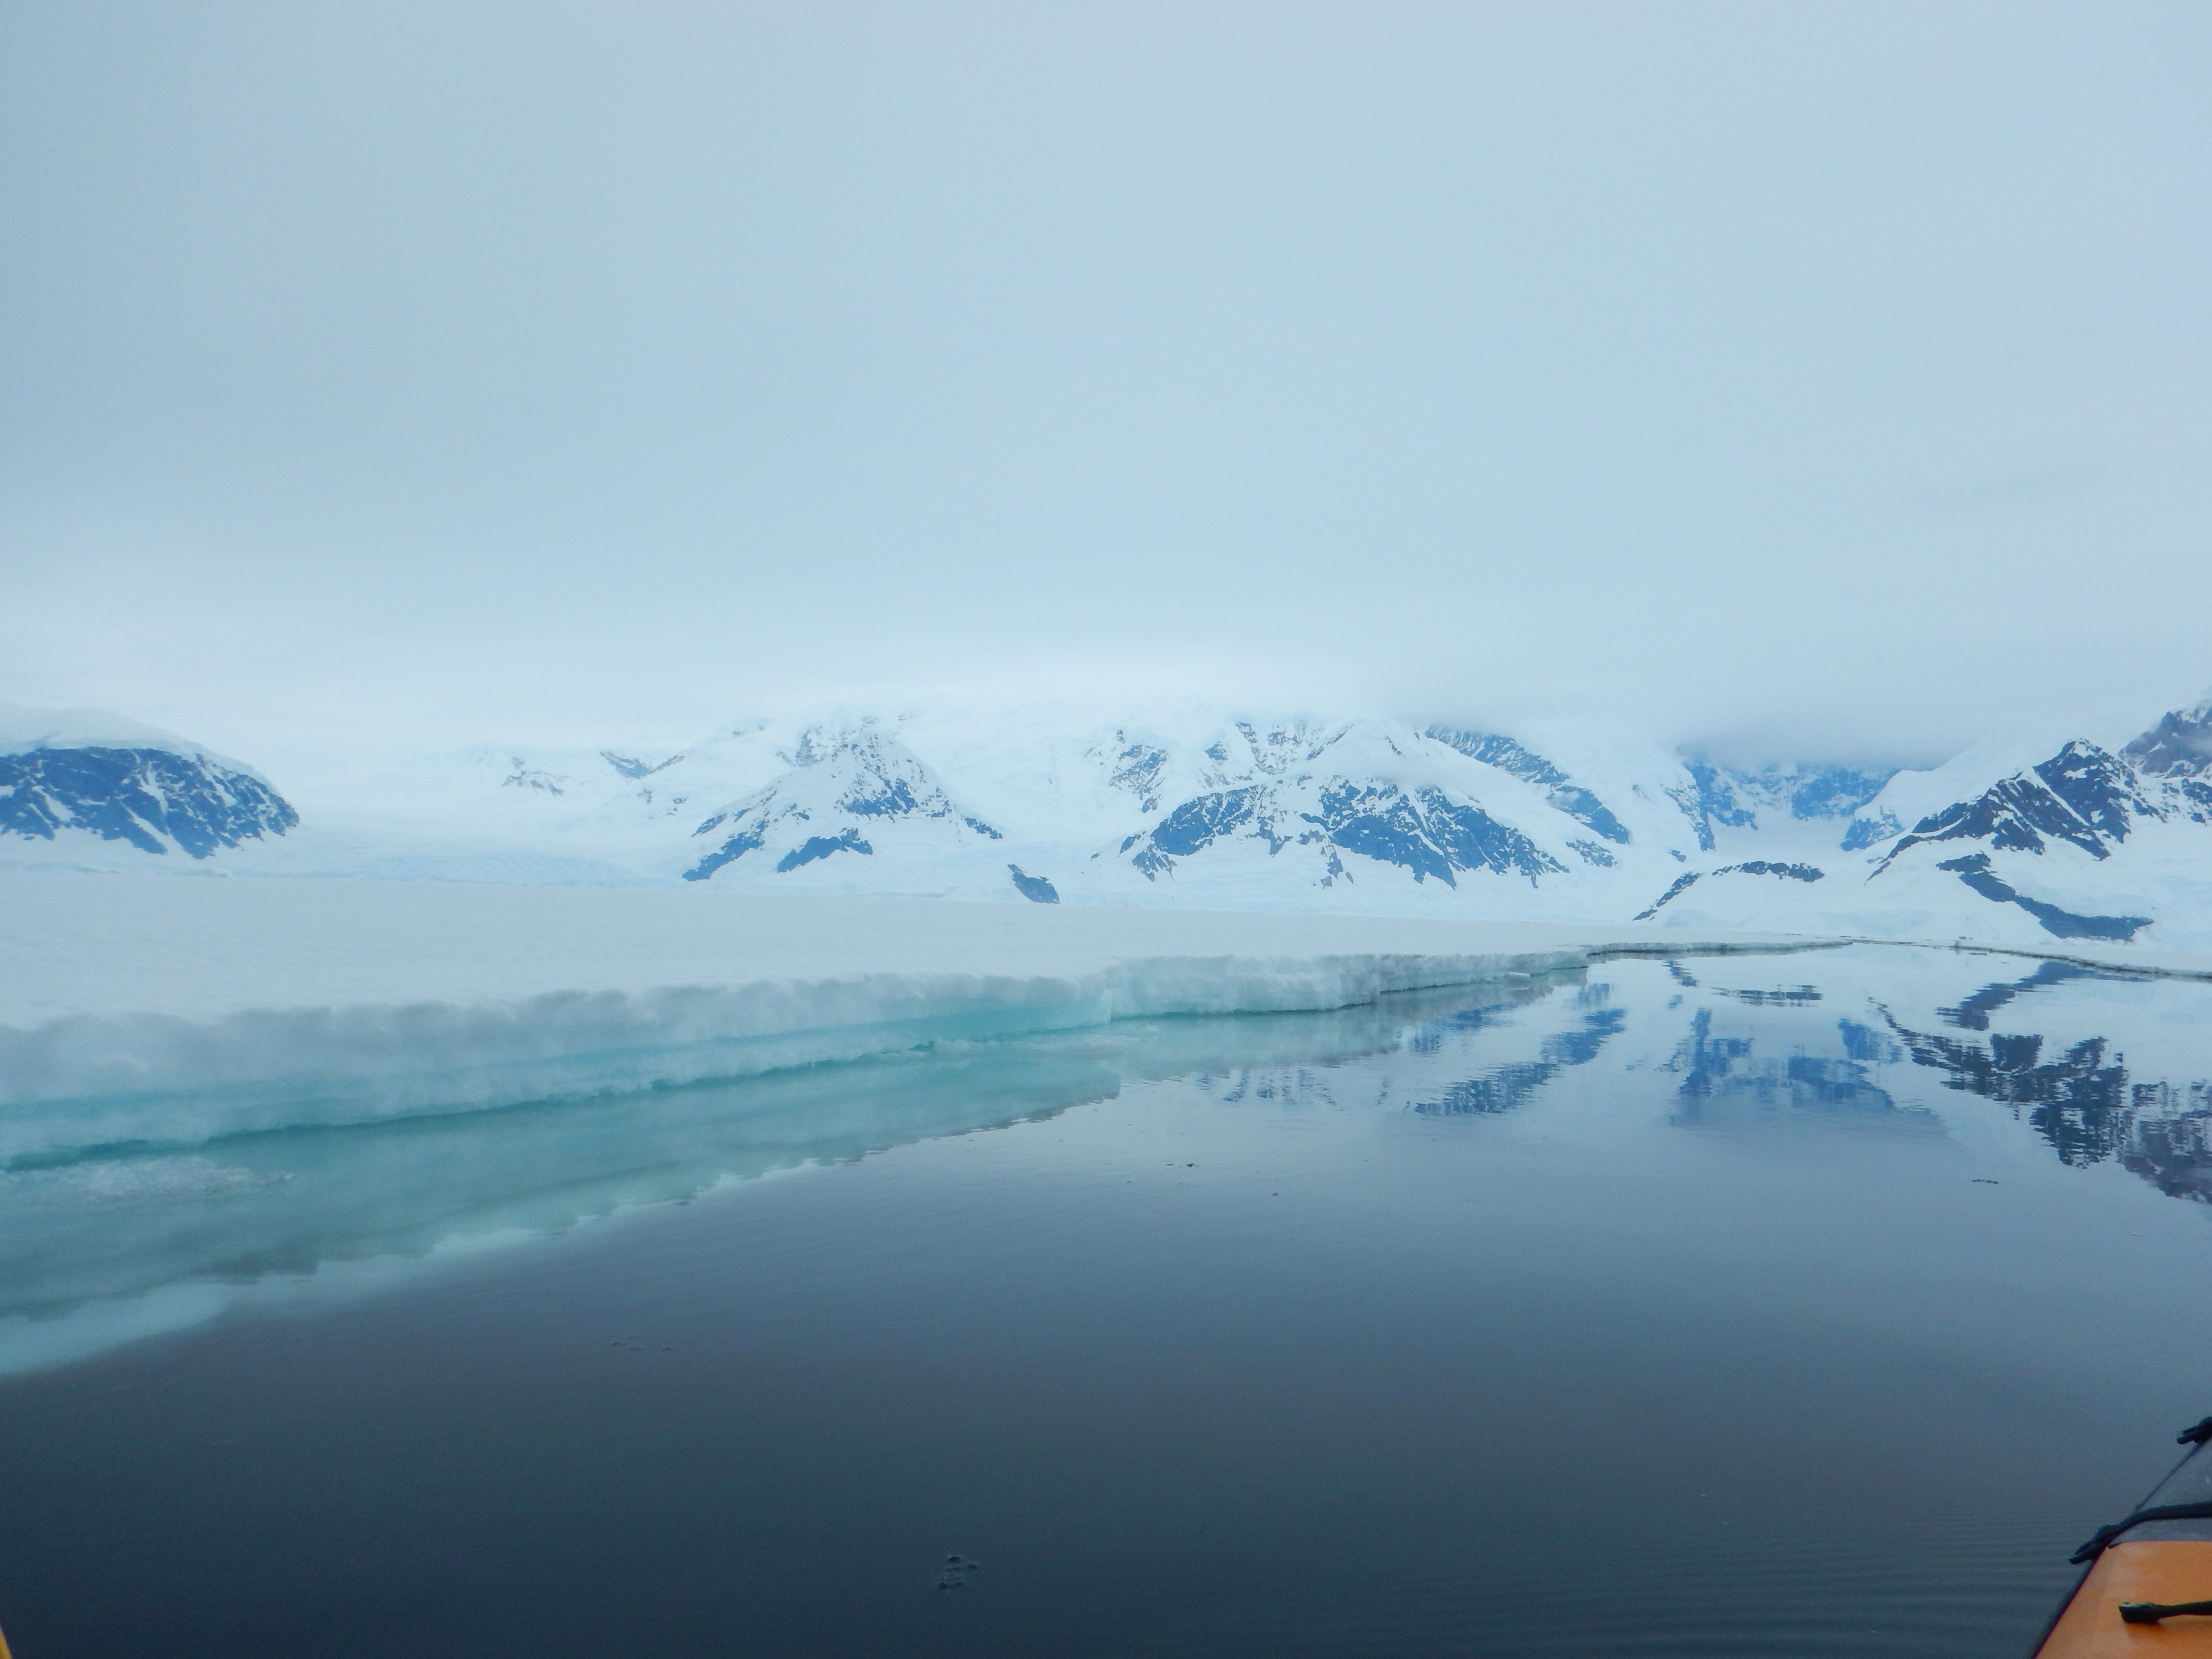 Kayaking between the sea ice